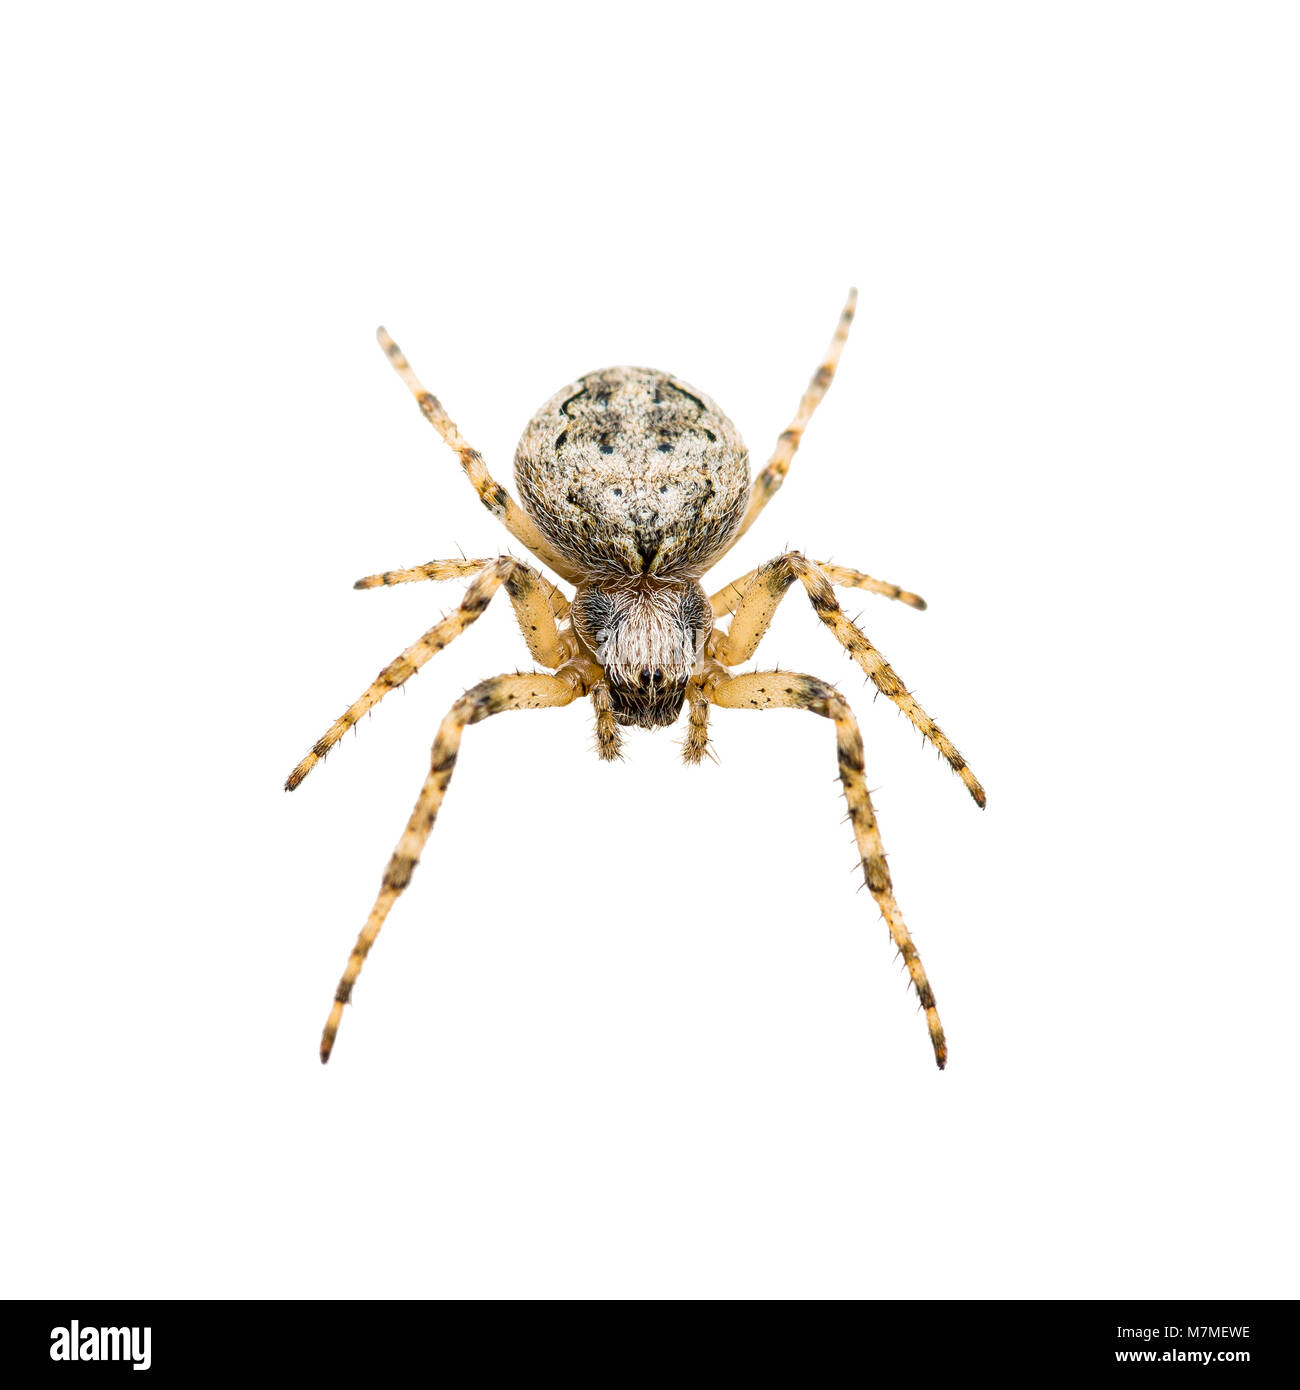 Insectes rampants arachnide araignée isolated on White Banque D'Images